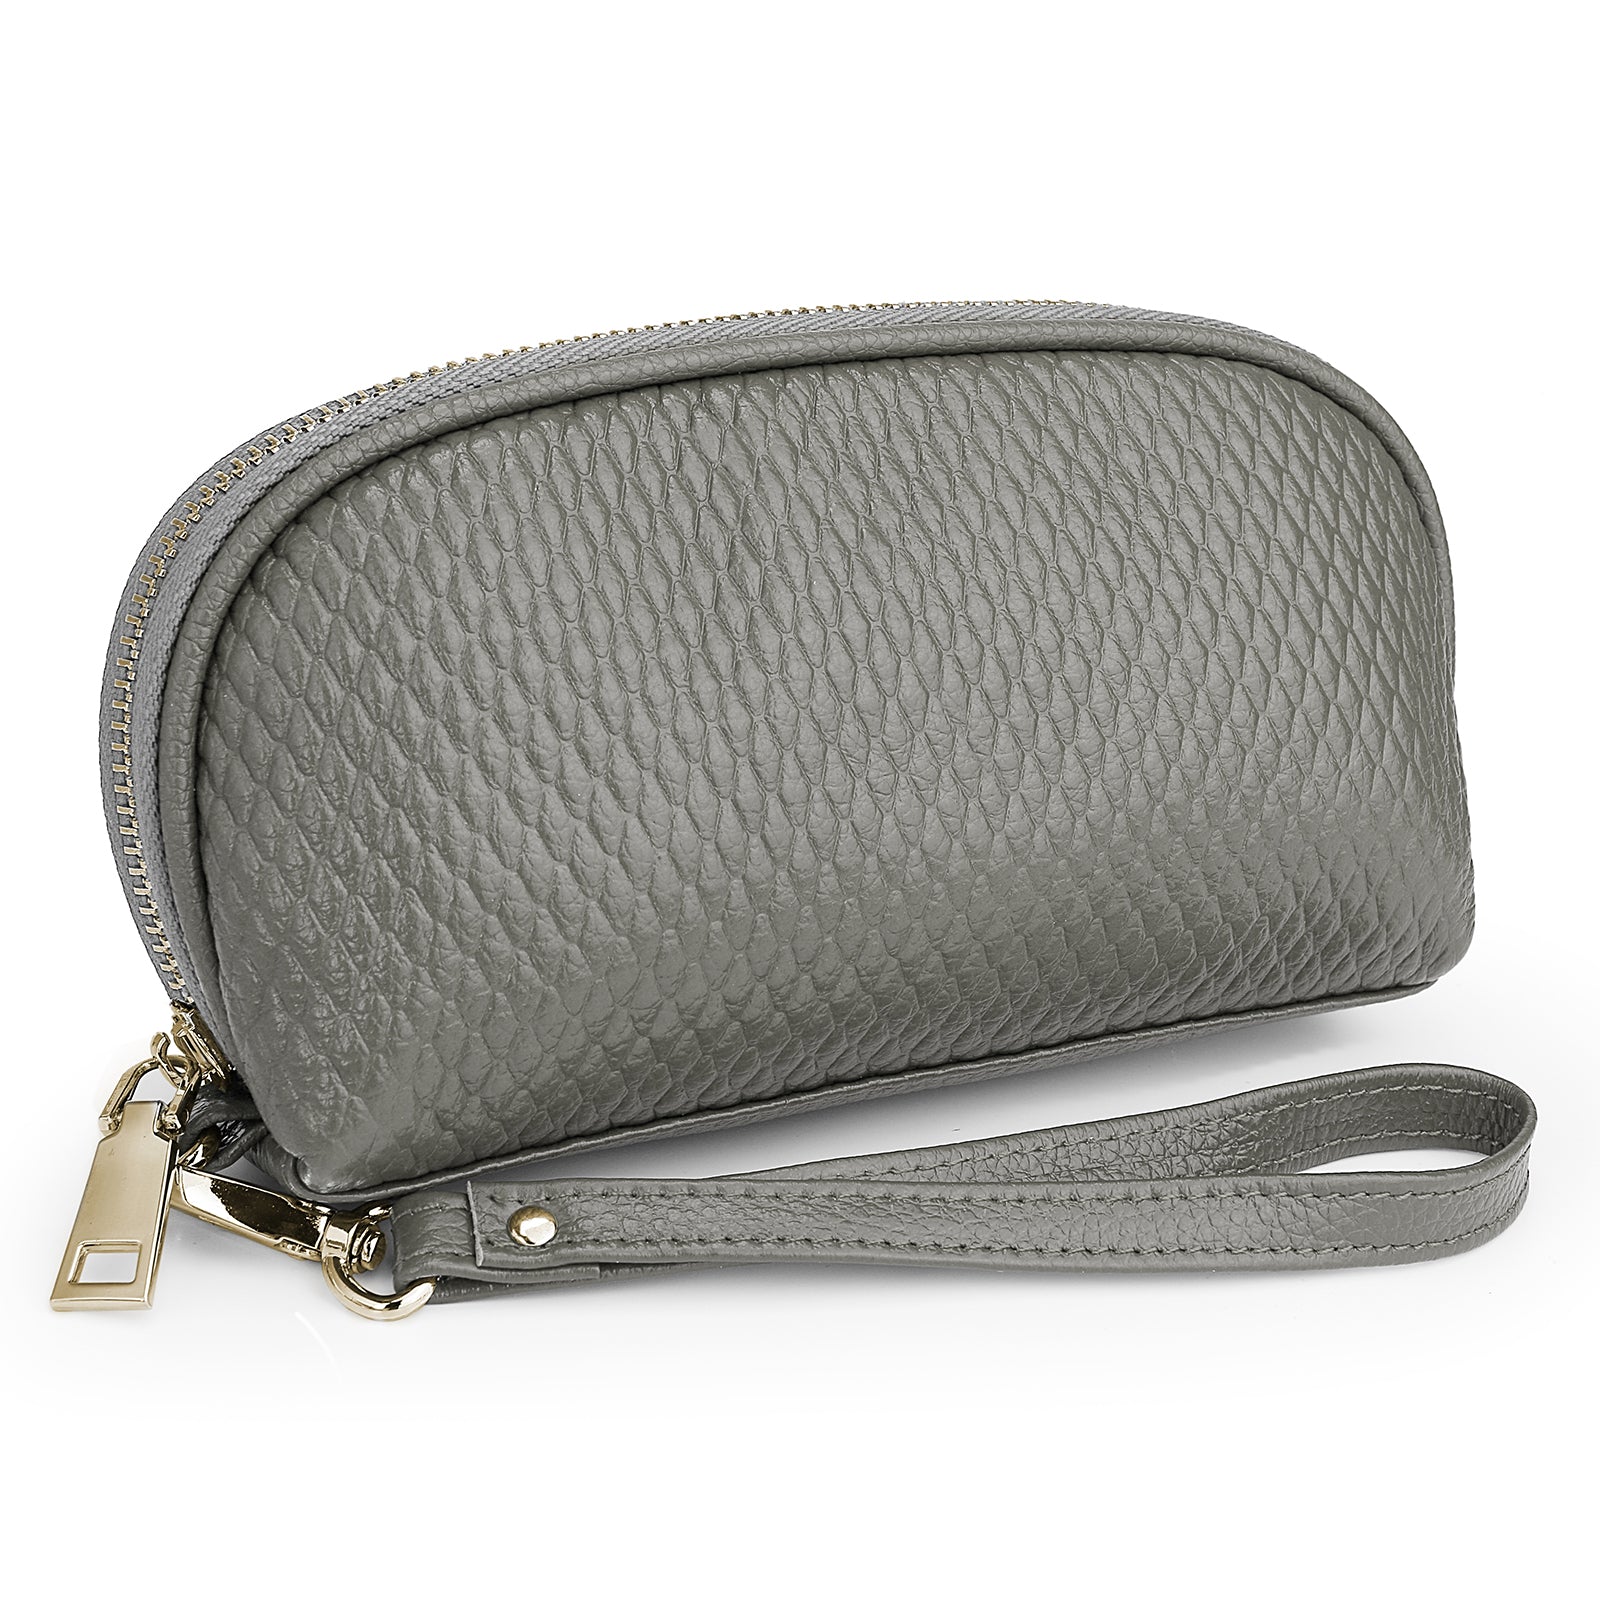 Black Quilted Lattice Genuine Leather Clutch Handbag Wristlet 1106 – YALUXE